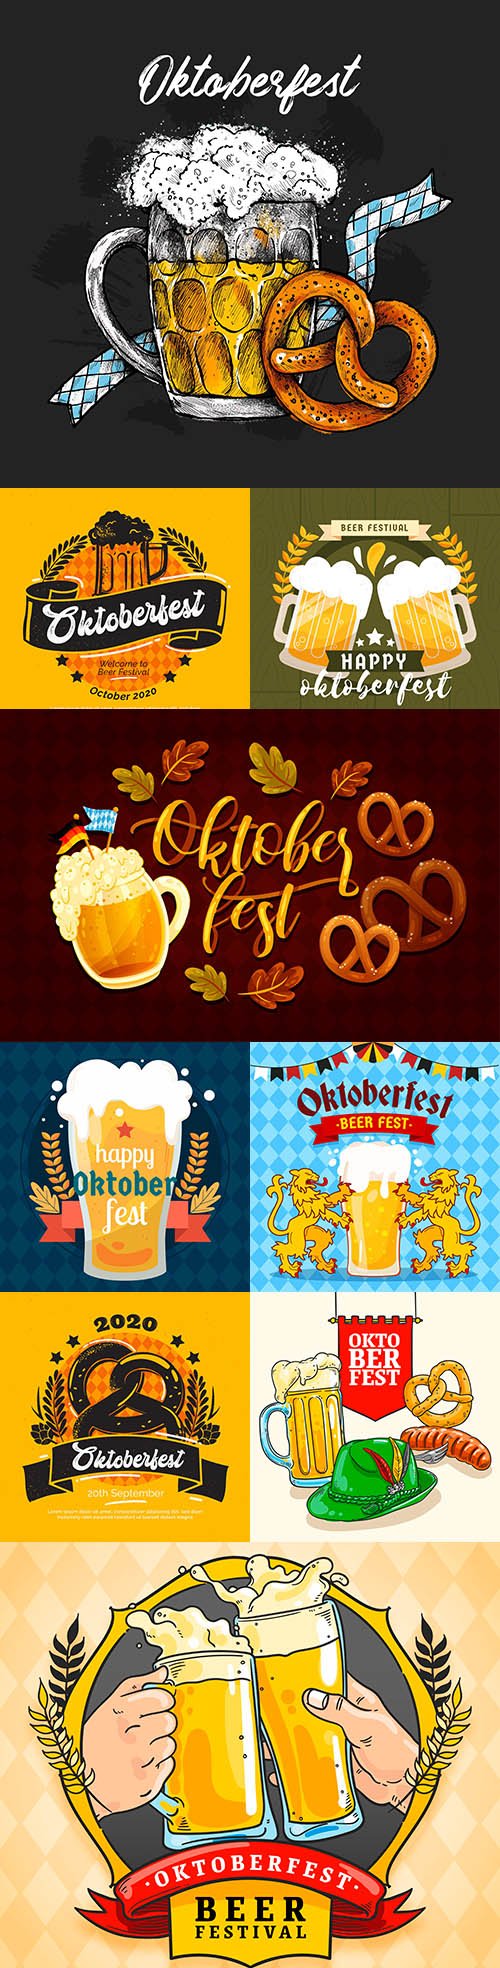 Oktoberfest Beer Festival Flat Design Illustration 5